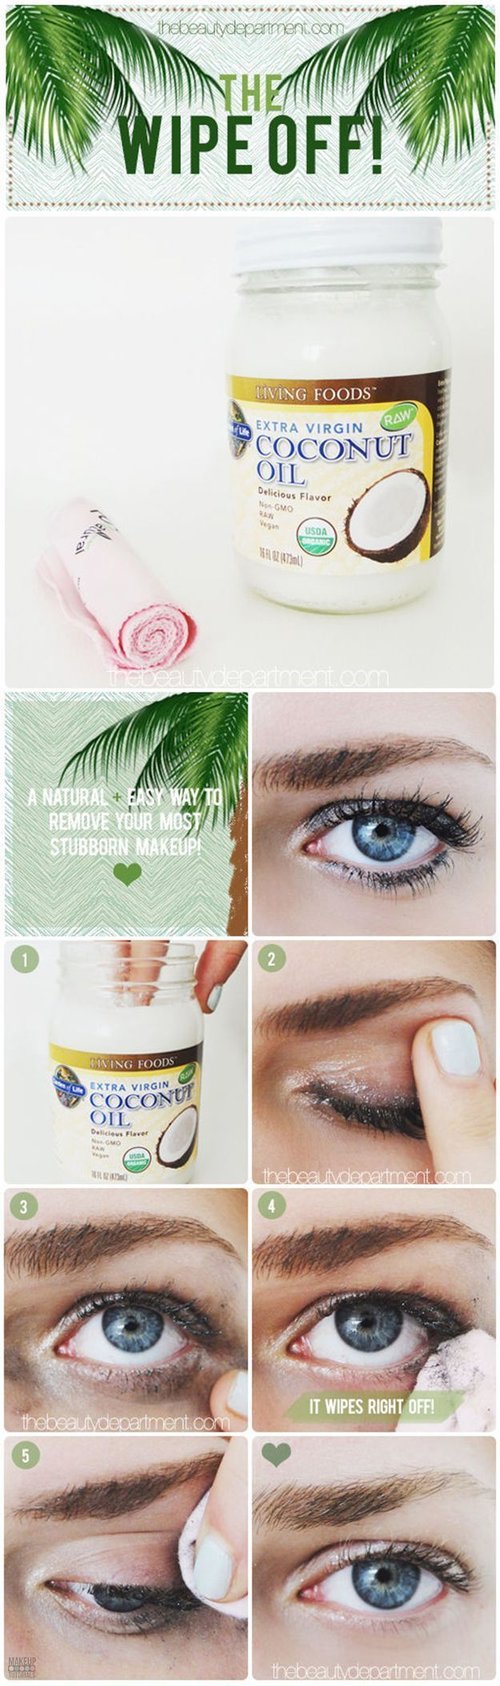  easy way to remove eye makeup